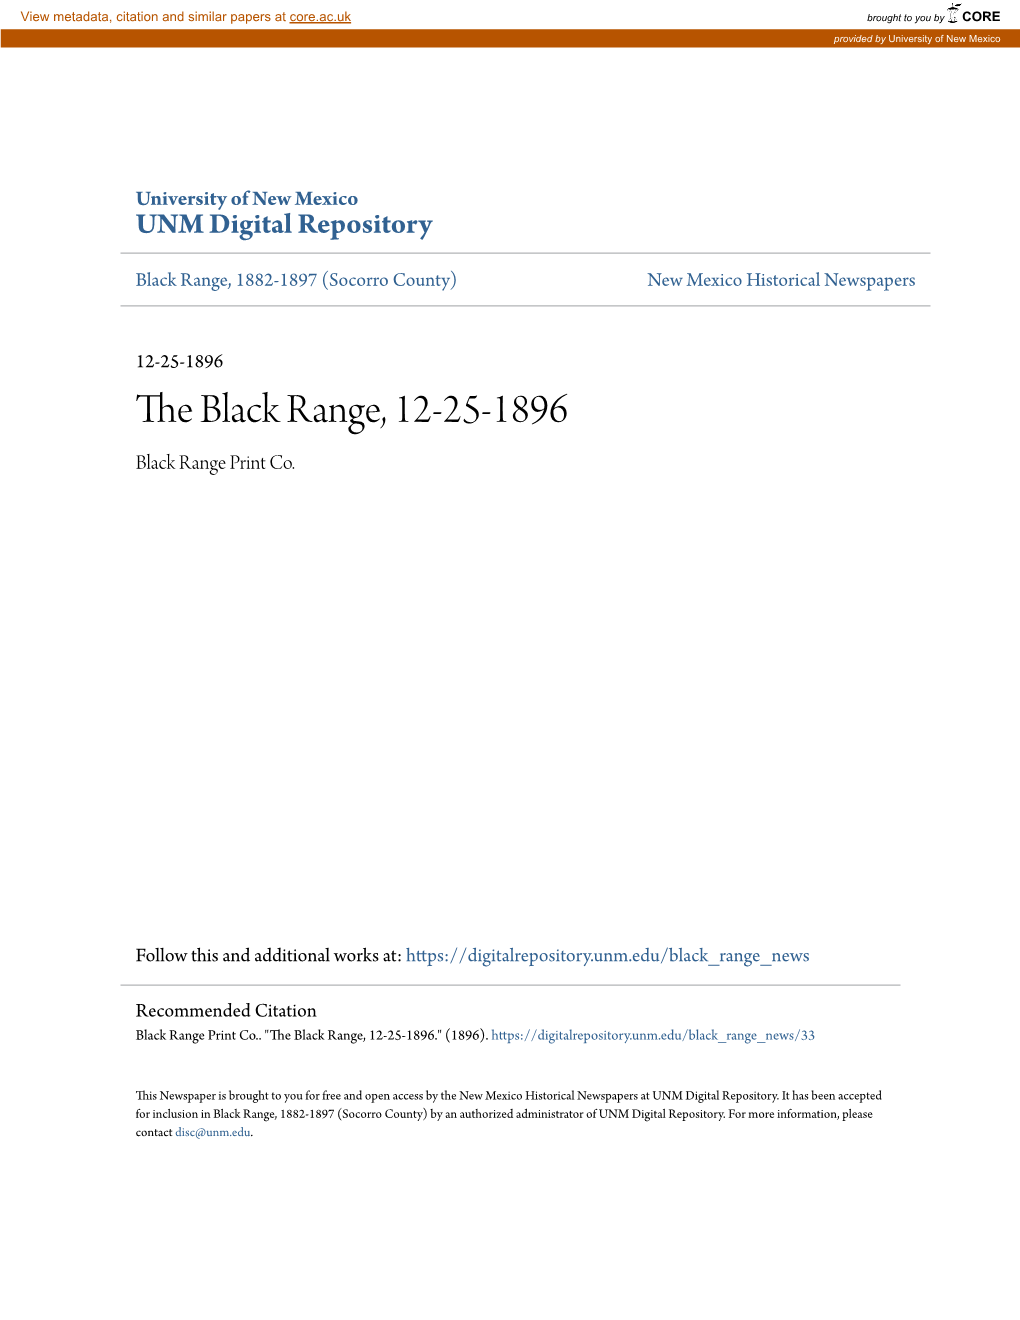 The Black Range, 12-25-1896